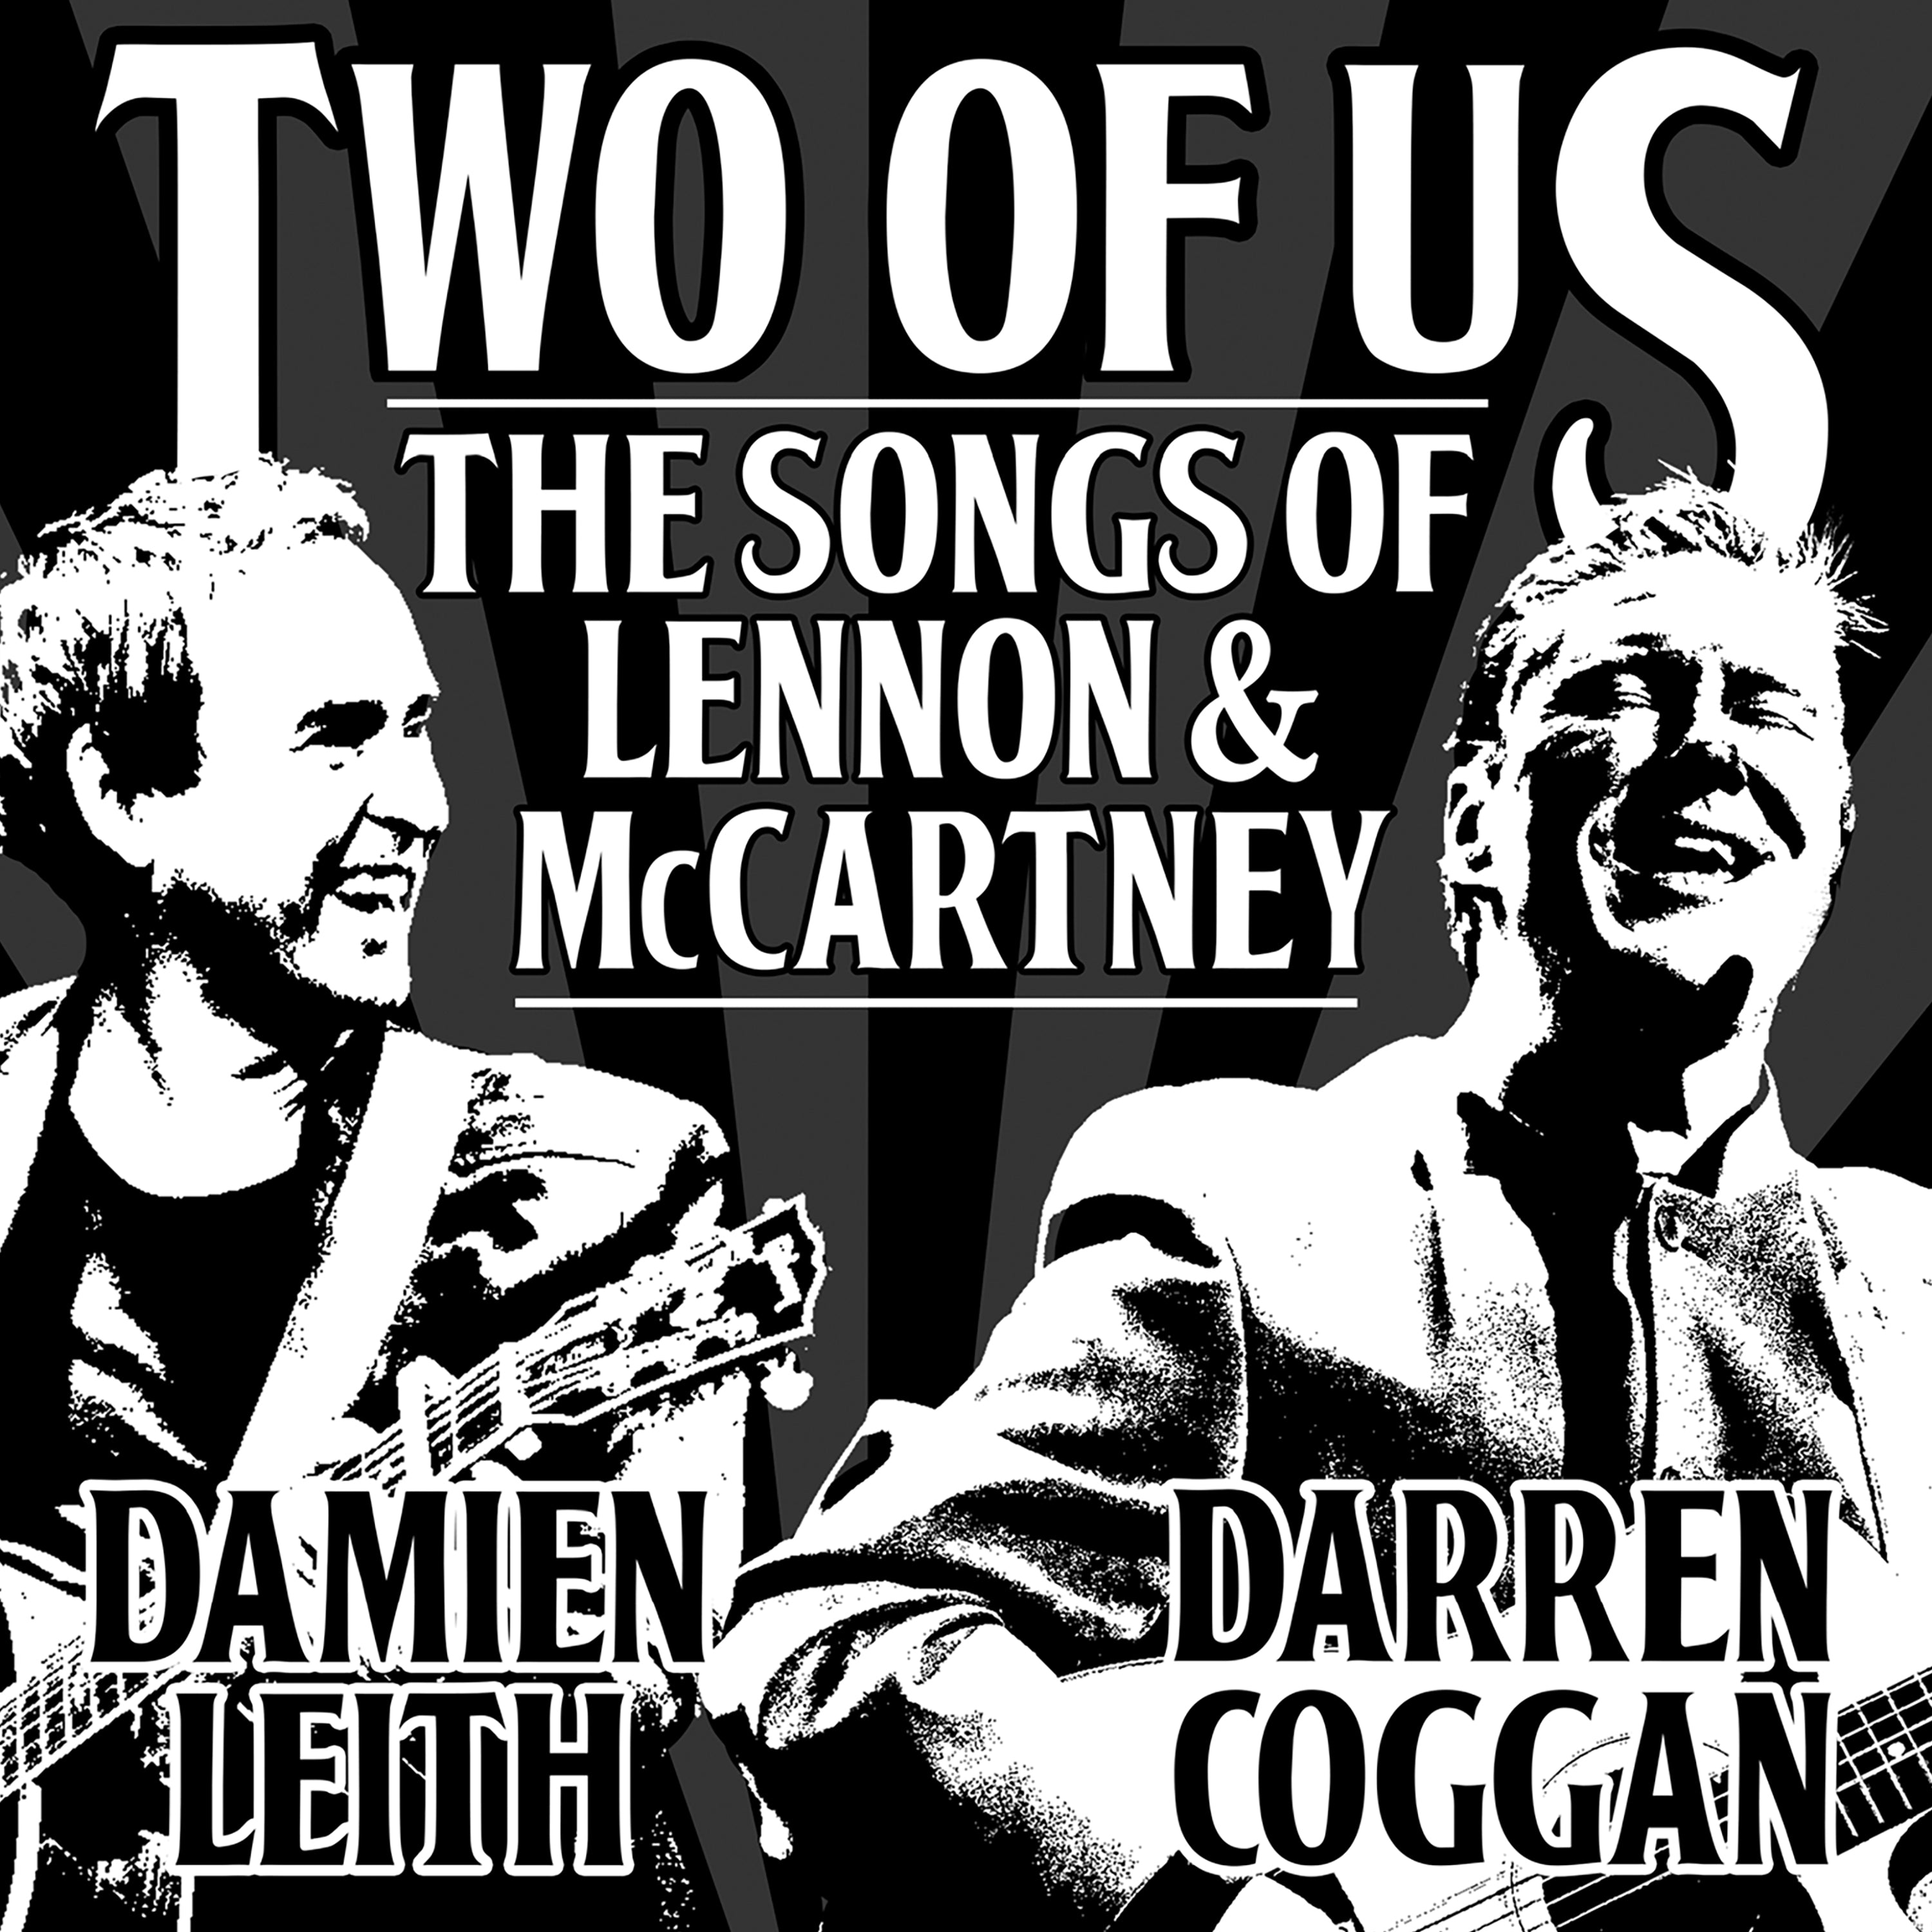 DAMIEN LEITH & DARREN COGGAN - TWO OF US: THE SONGS OF LENNON & MCCARTNEY